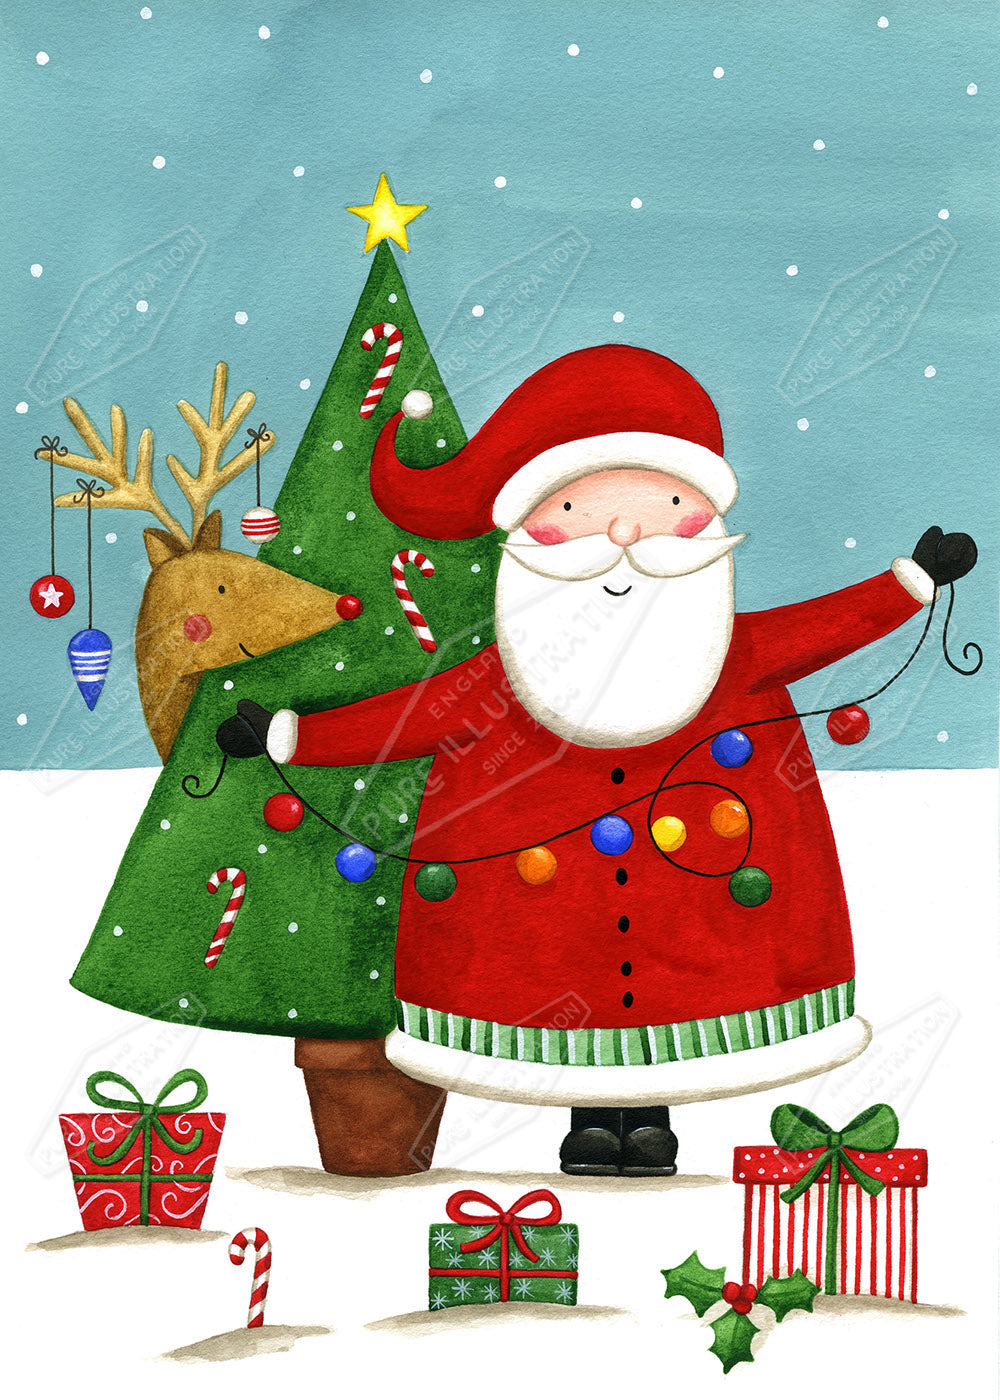 00025231AAI - Santa Decorating Christmas Tree by Anna Aitken - Pure art Licensing Agency